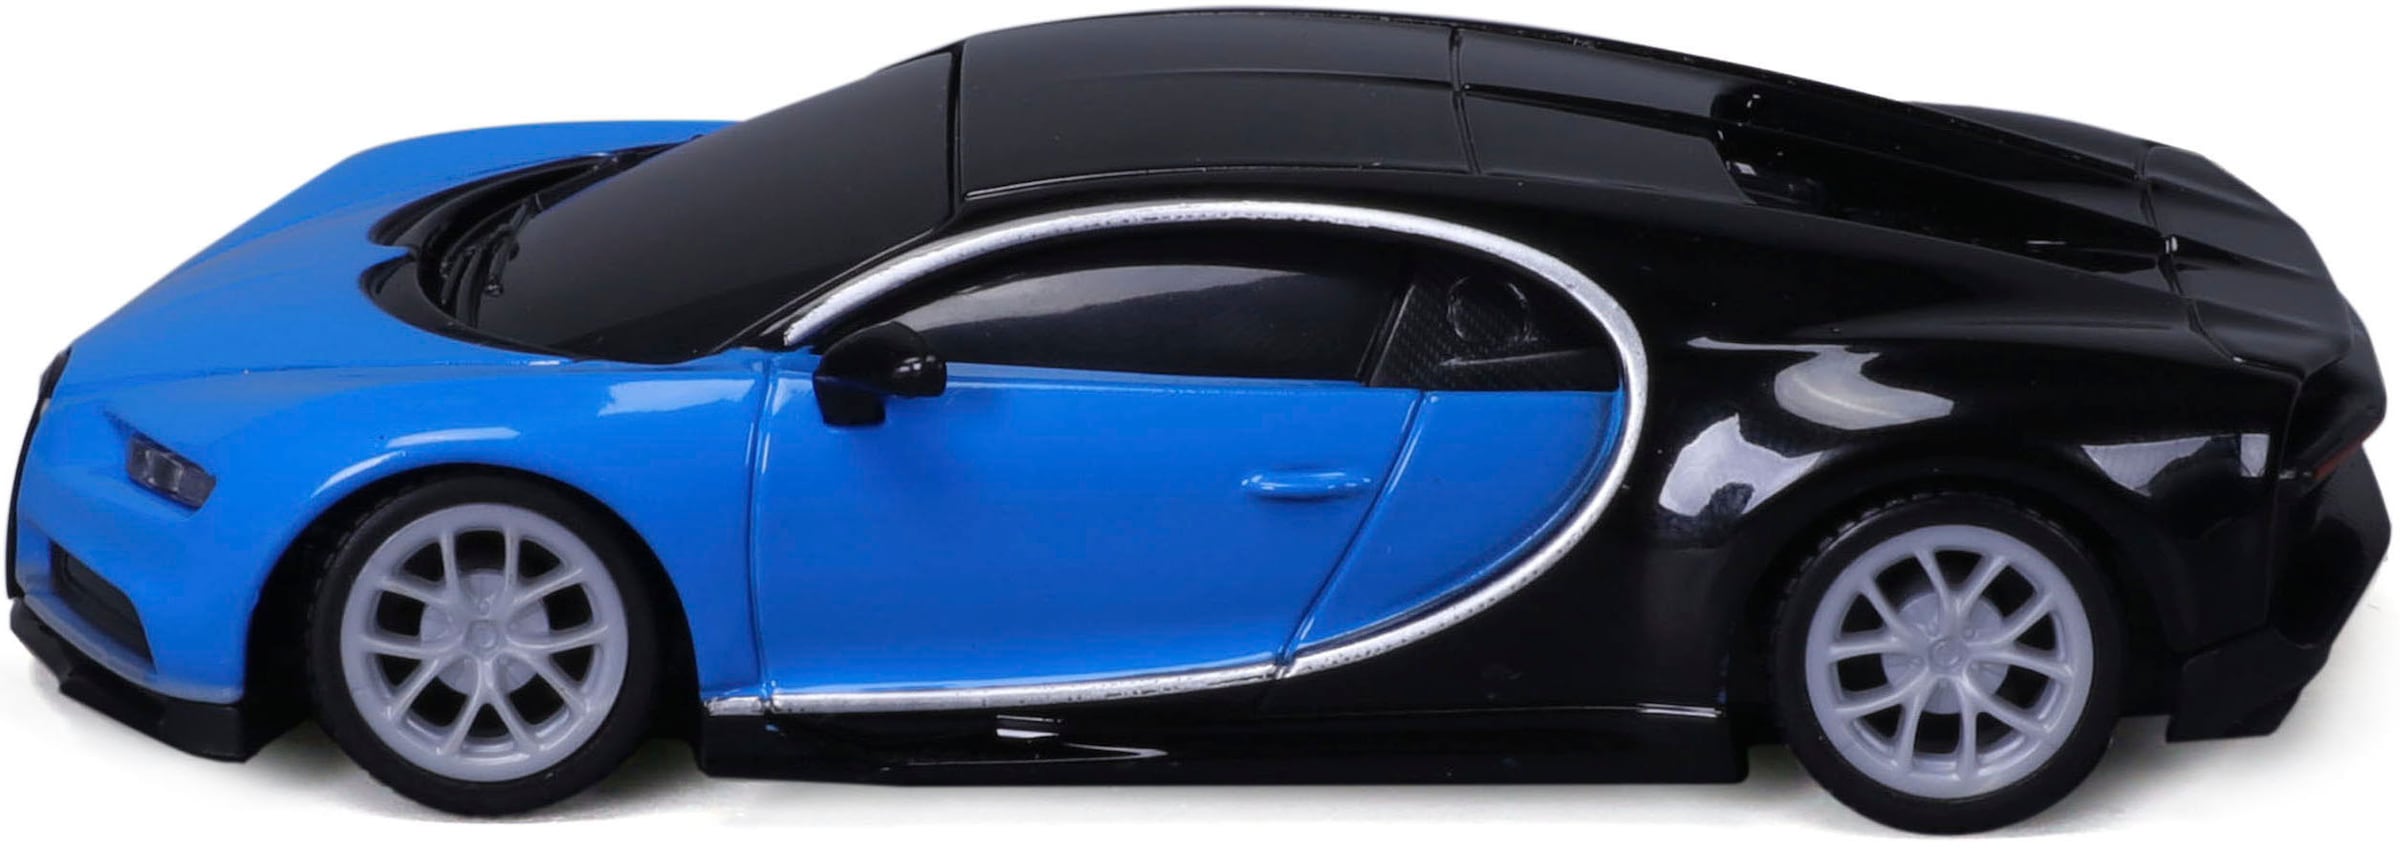 Maisto Tech RC-Auto »Bugatti Chiron«, BLUETOOTH 5.0, mit Licht